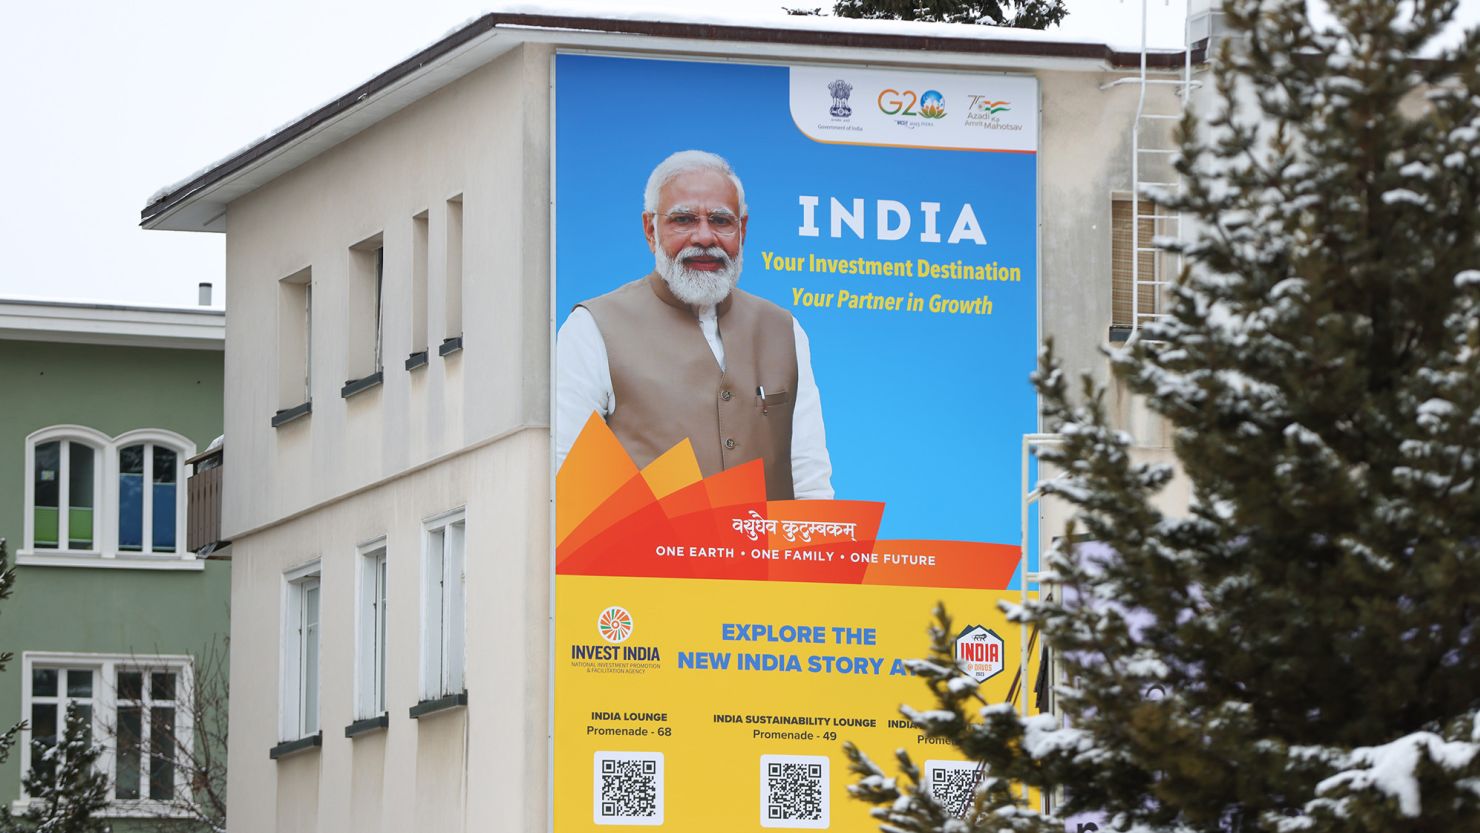 Invest India is promoting Asia's third-biggest economy at the World Economic Forum in Davos, Switzerland.